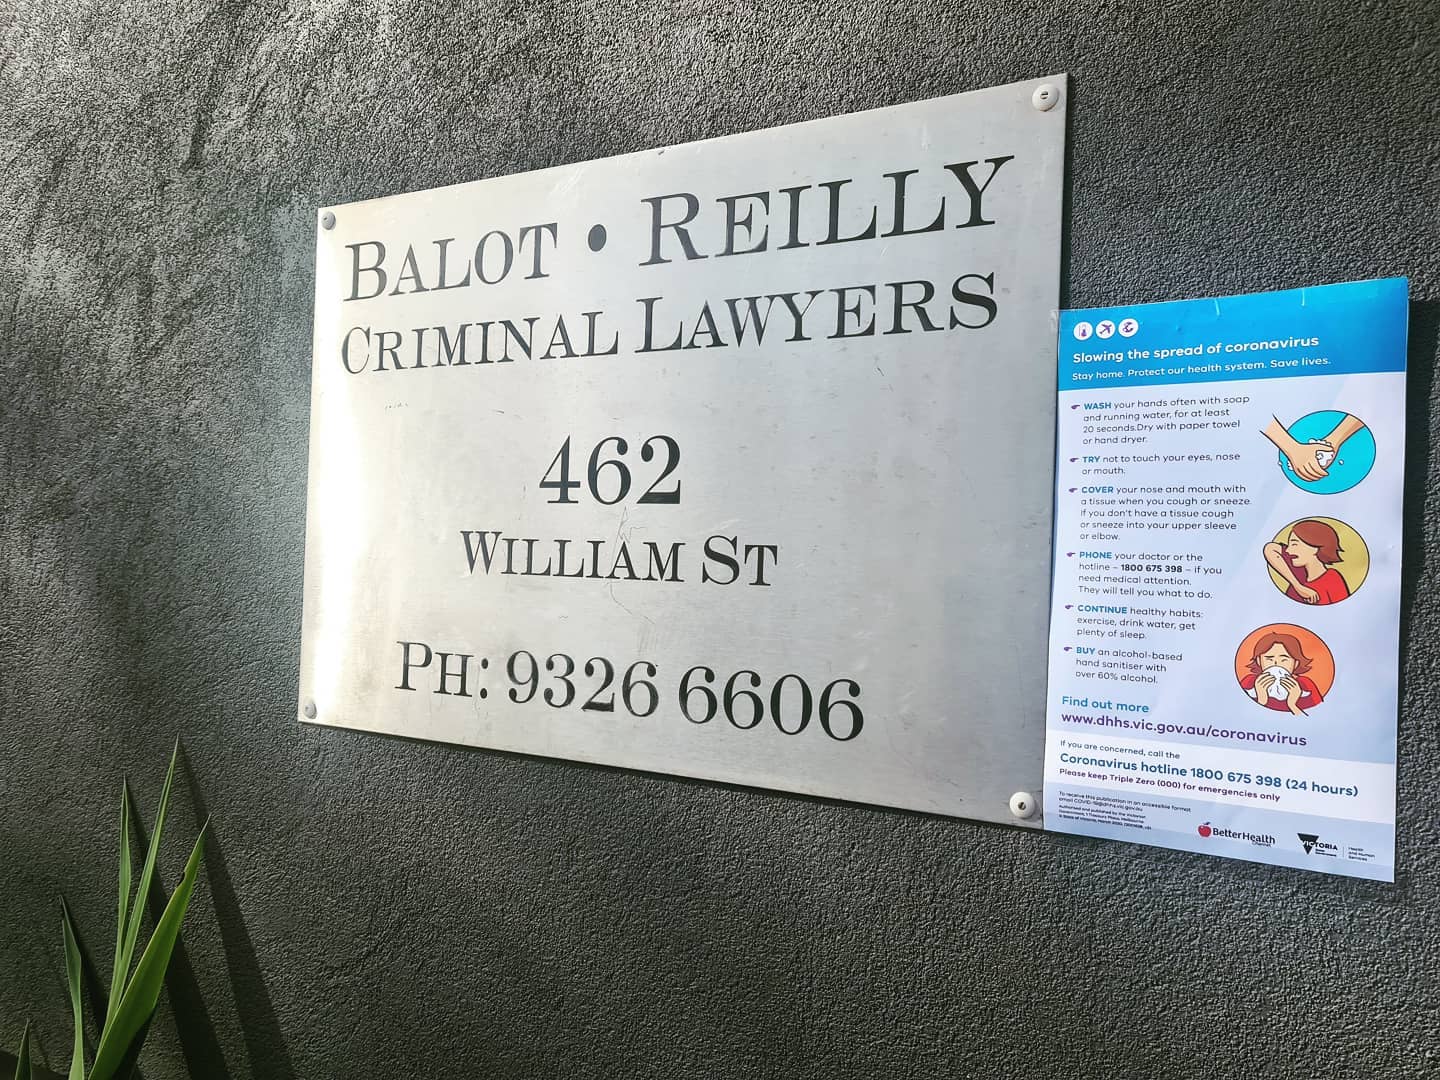 Balot Reilly Criminal Lawyers Criminal Defence Lawyers Melbourne